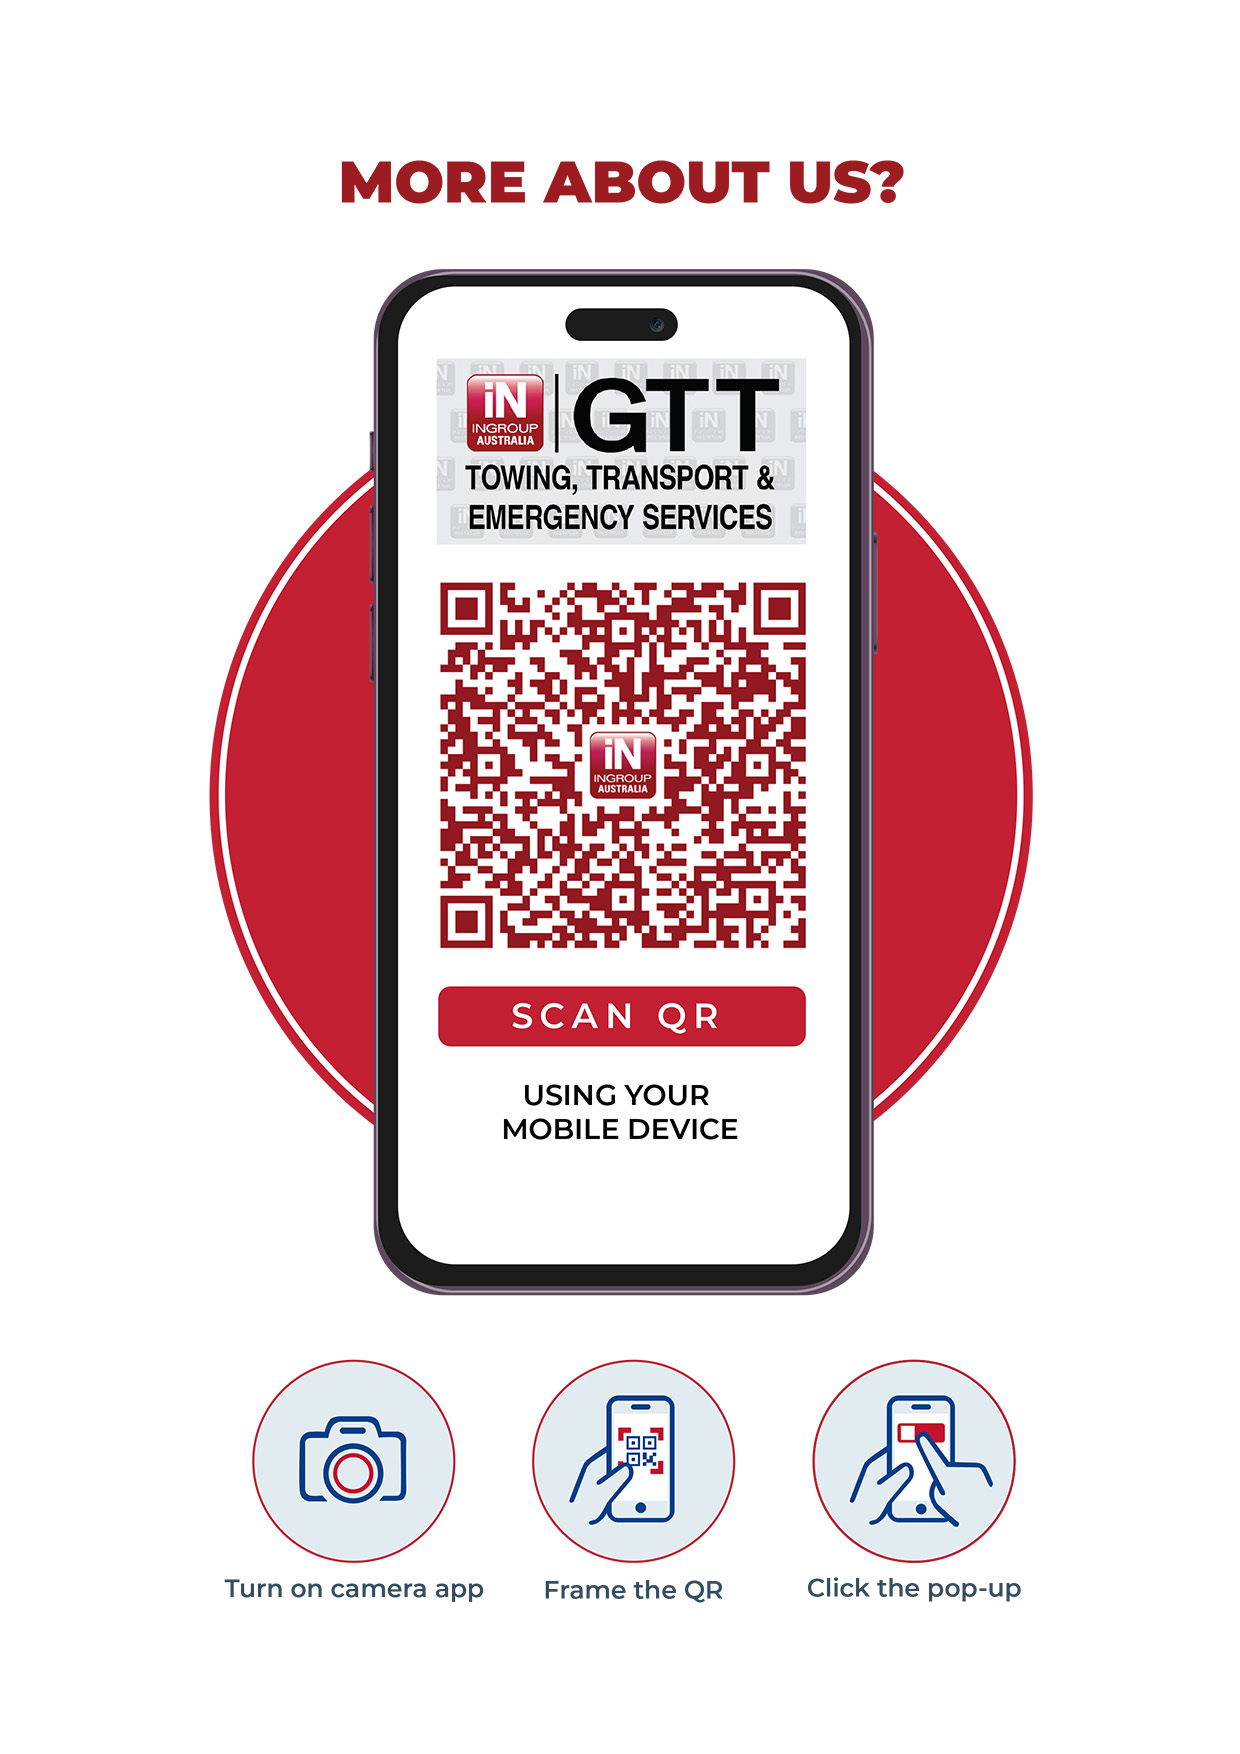 GTT Towing Transport & Emergency Services.jpg